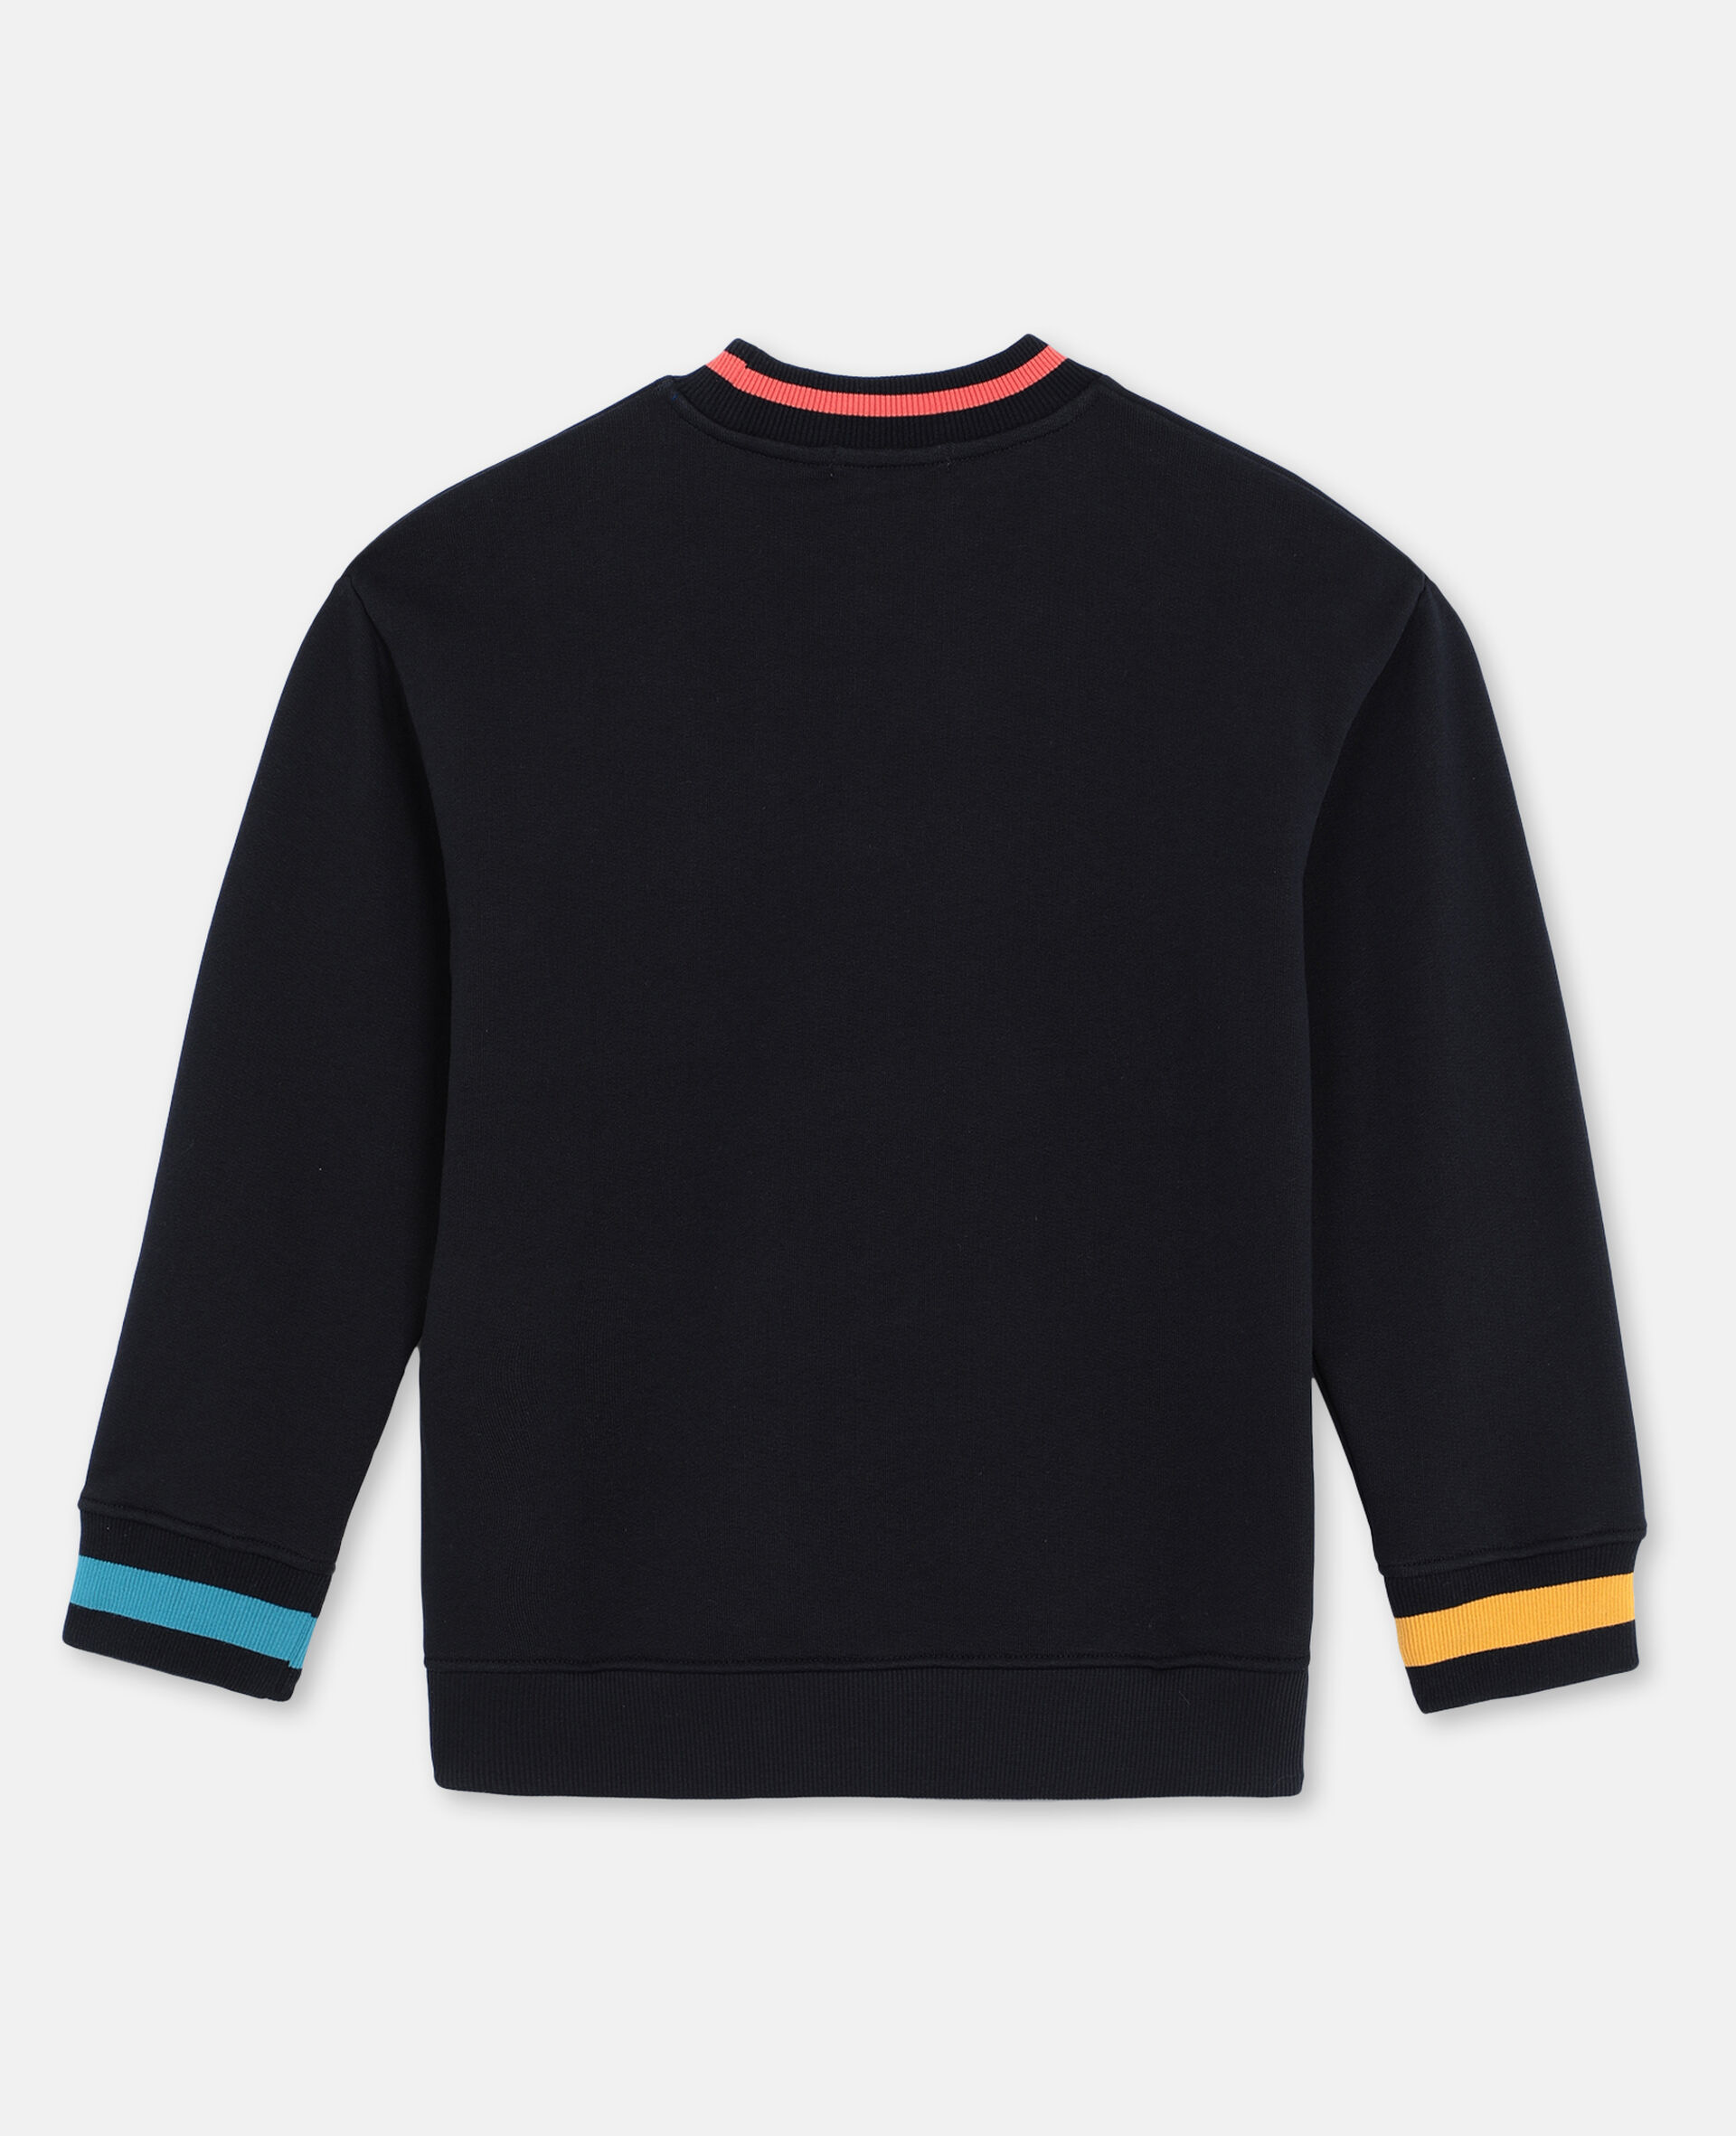 Skater Oversize Cotton Sweatshirt -Black-large image number 3